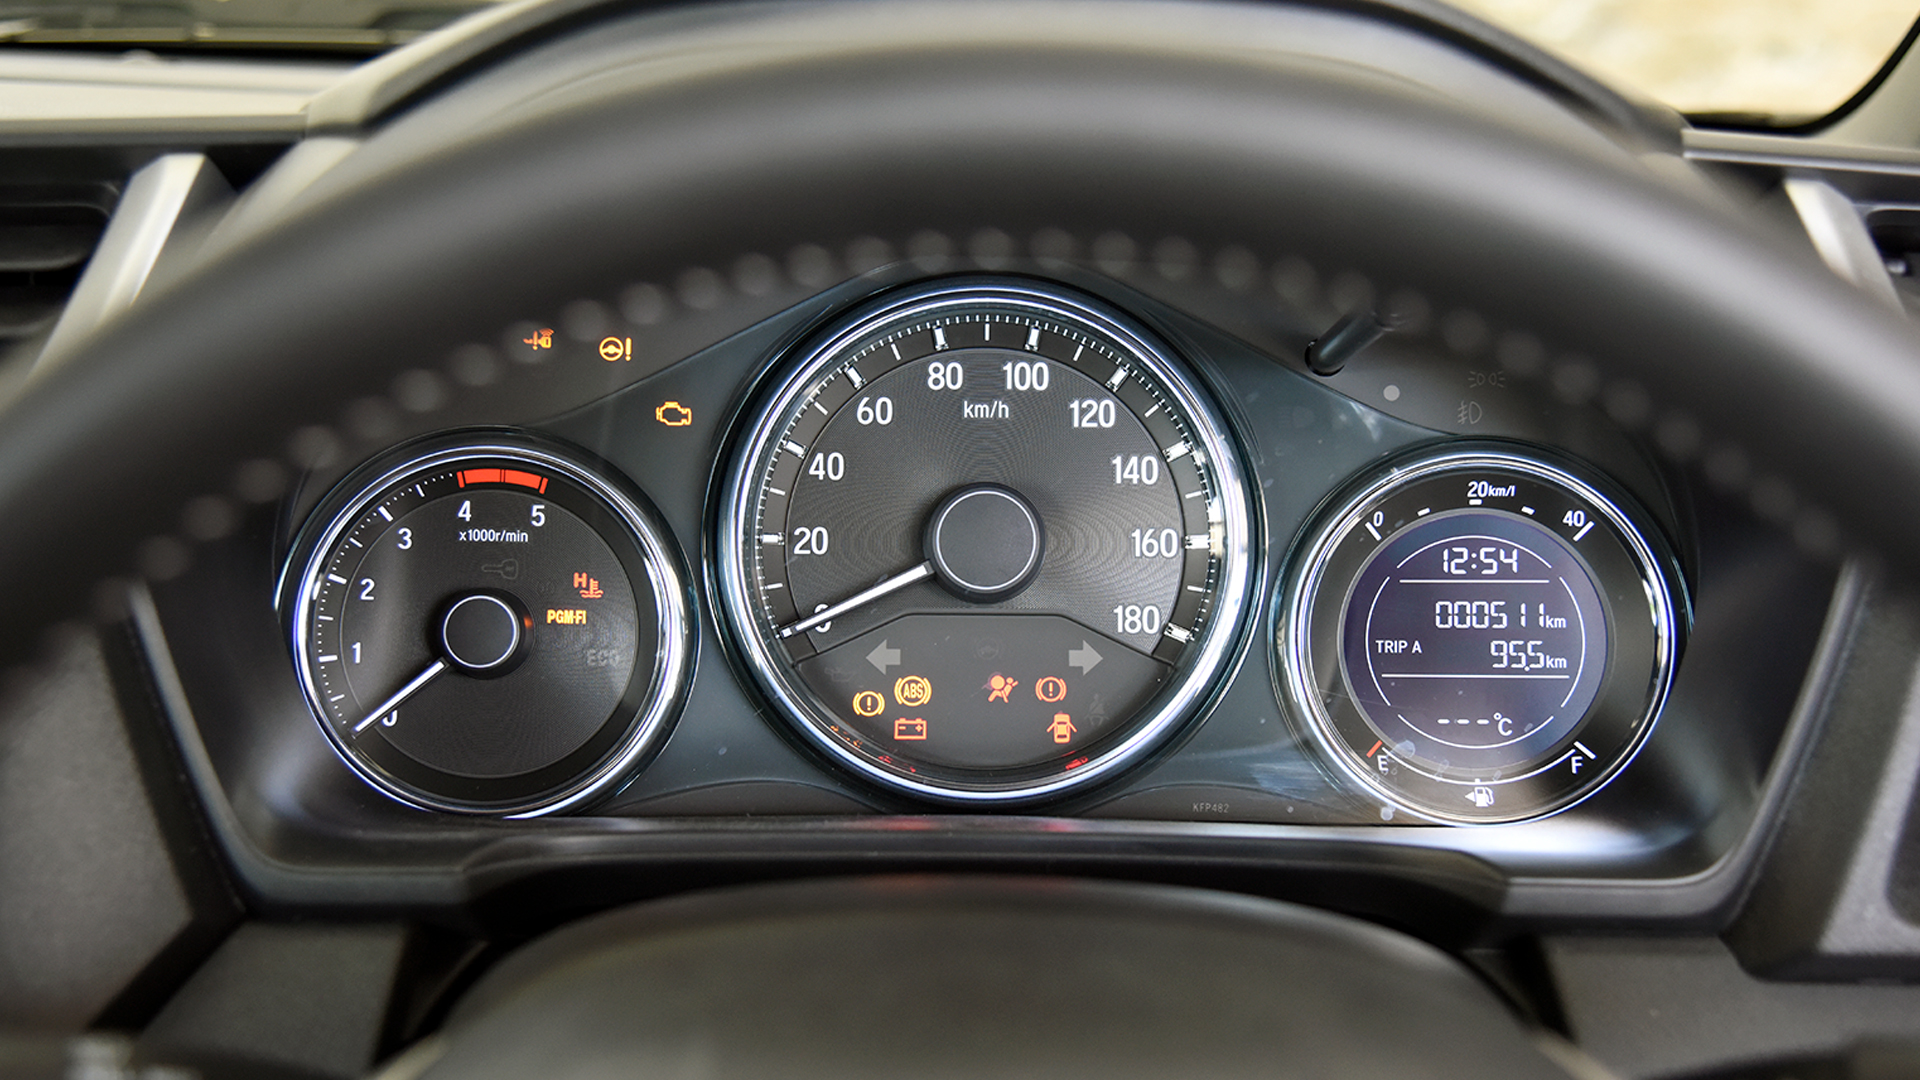 Honda BRV 2016 VX Petrol Interior Car Photos - Overdrive